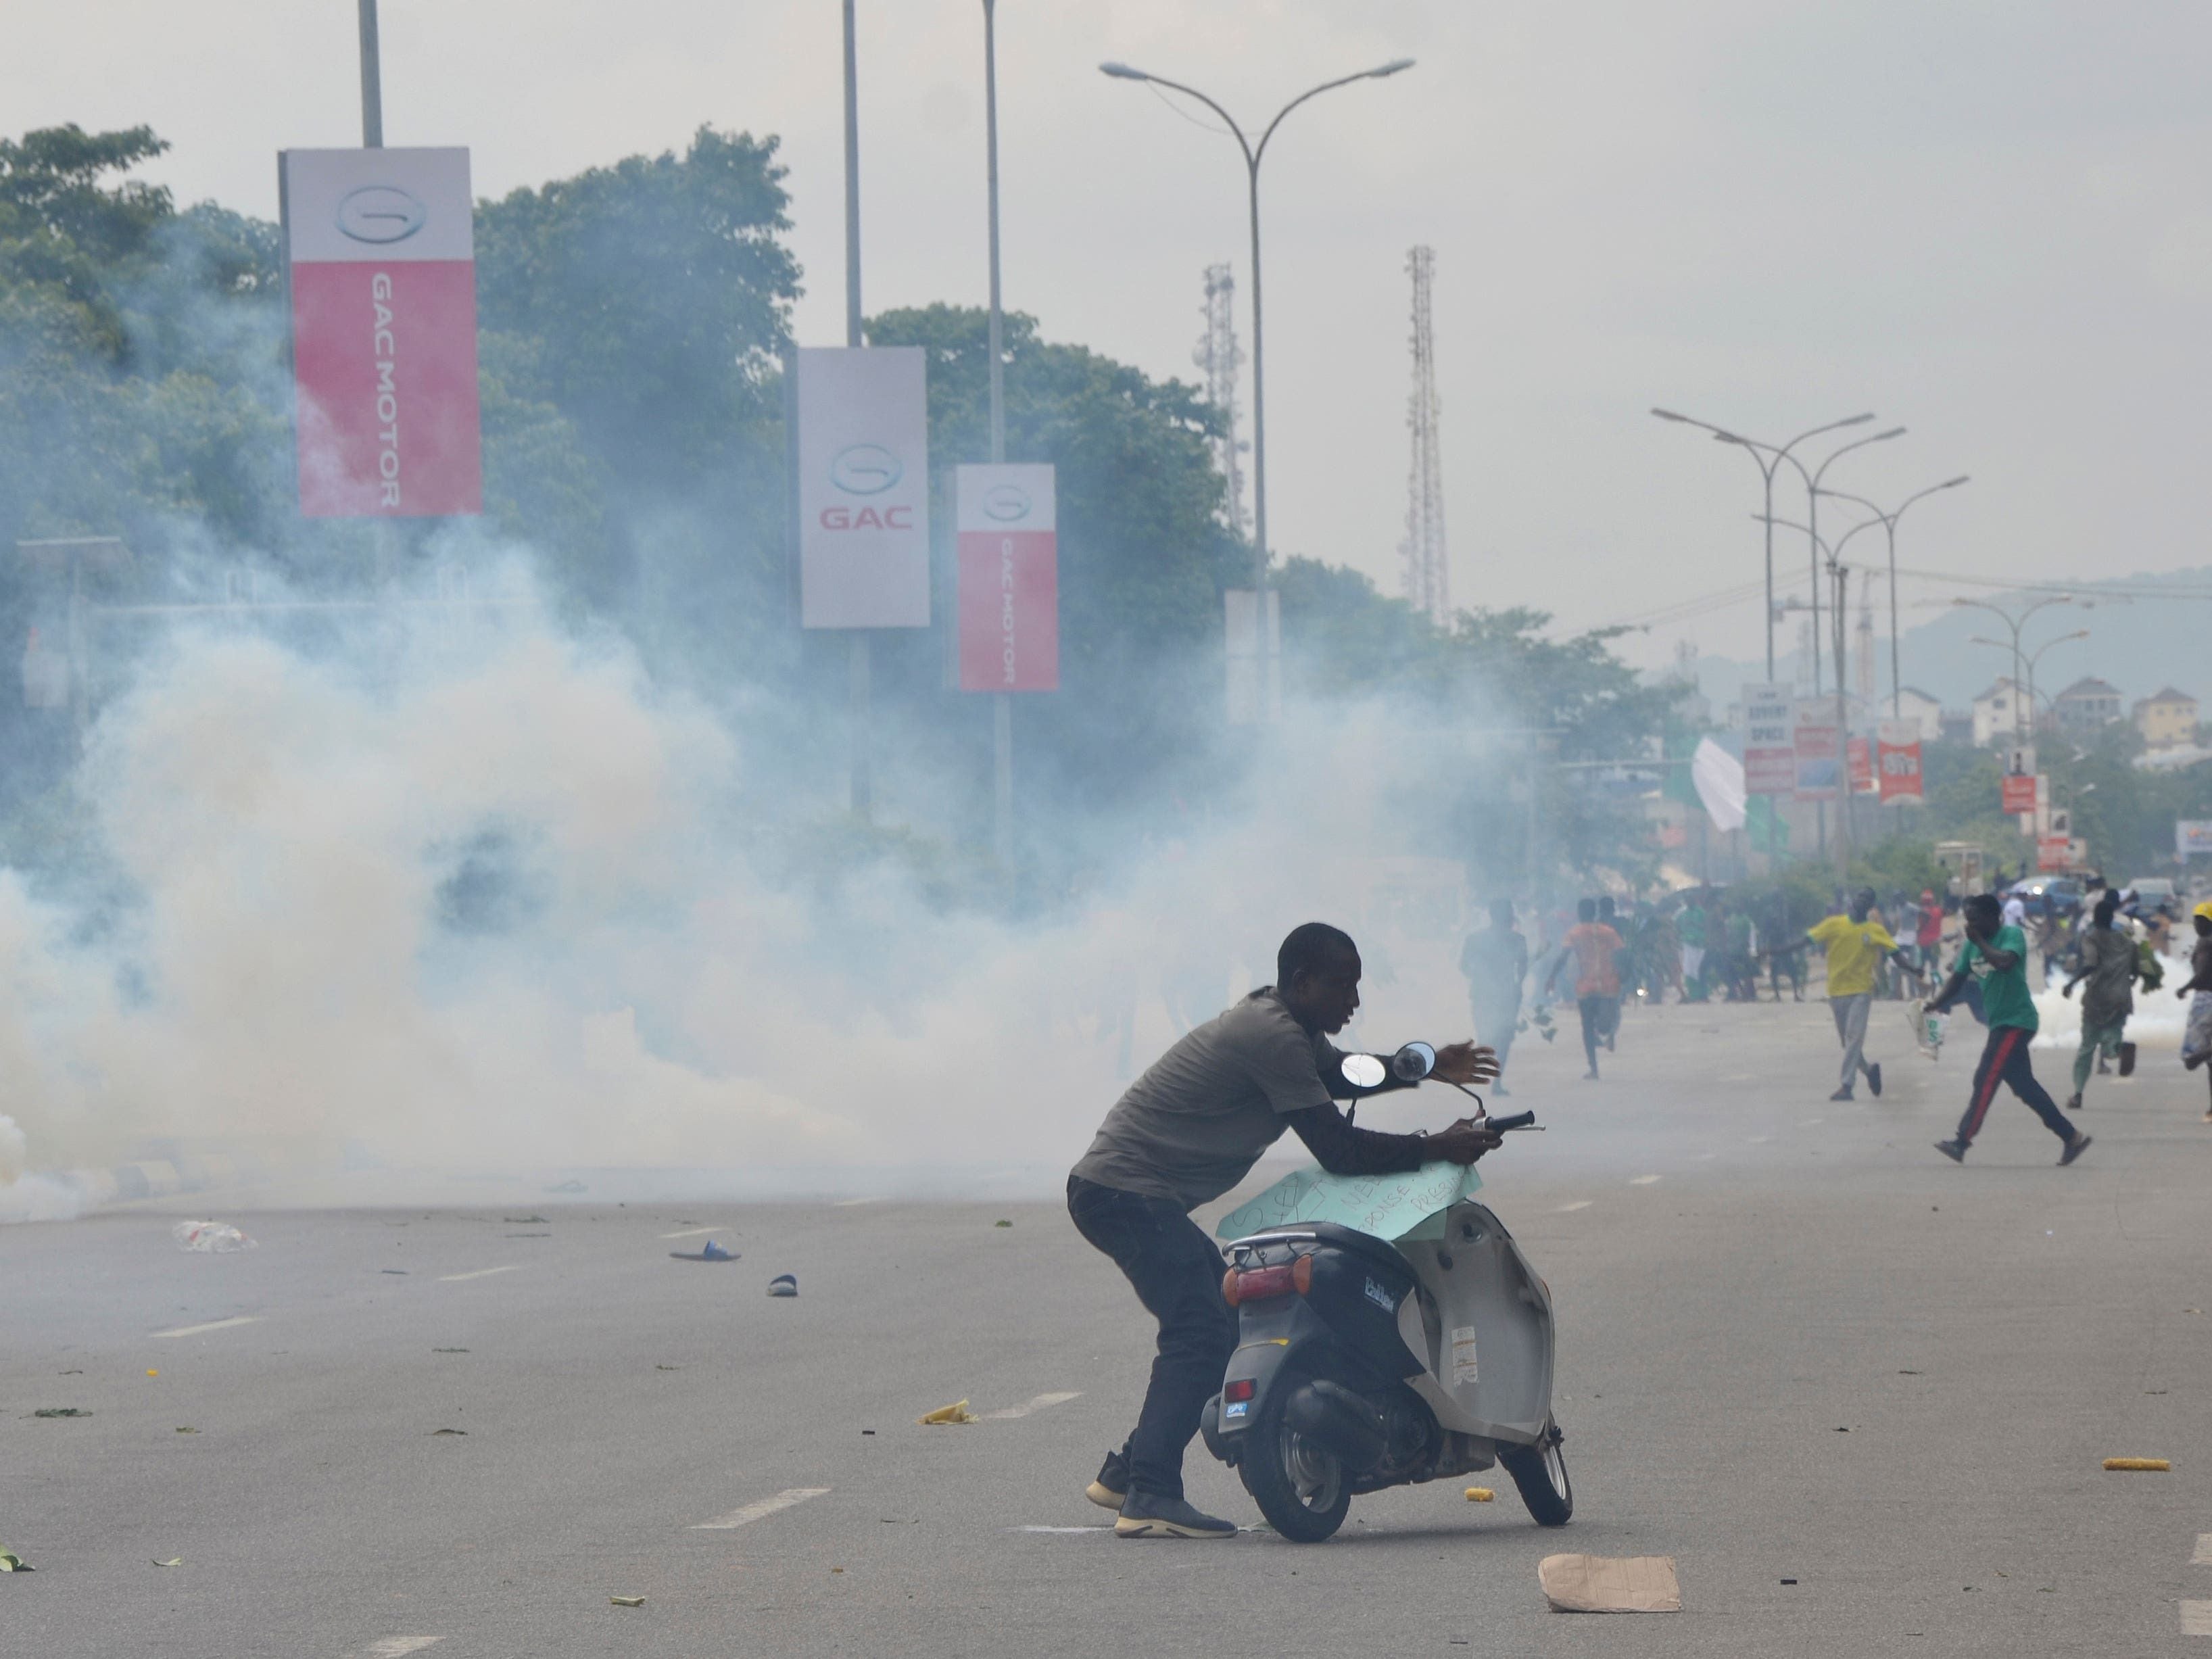 Nigerian leader demands end to protests over hardship which have turned violent